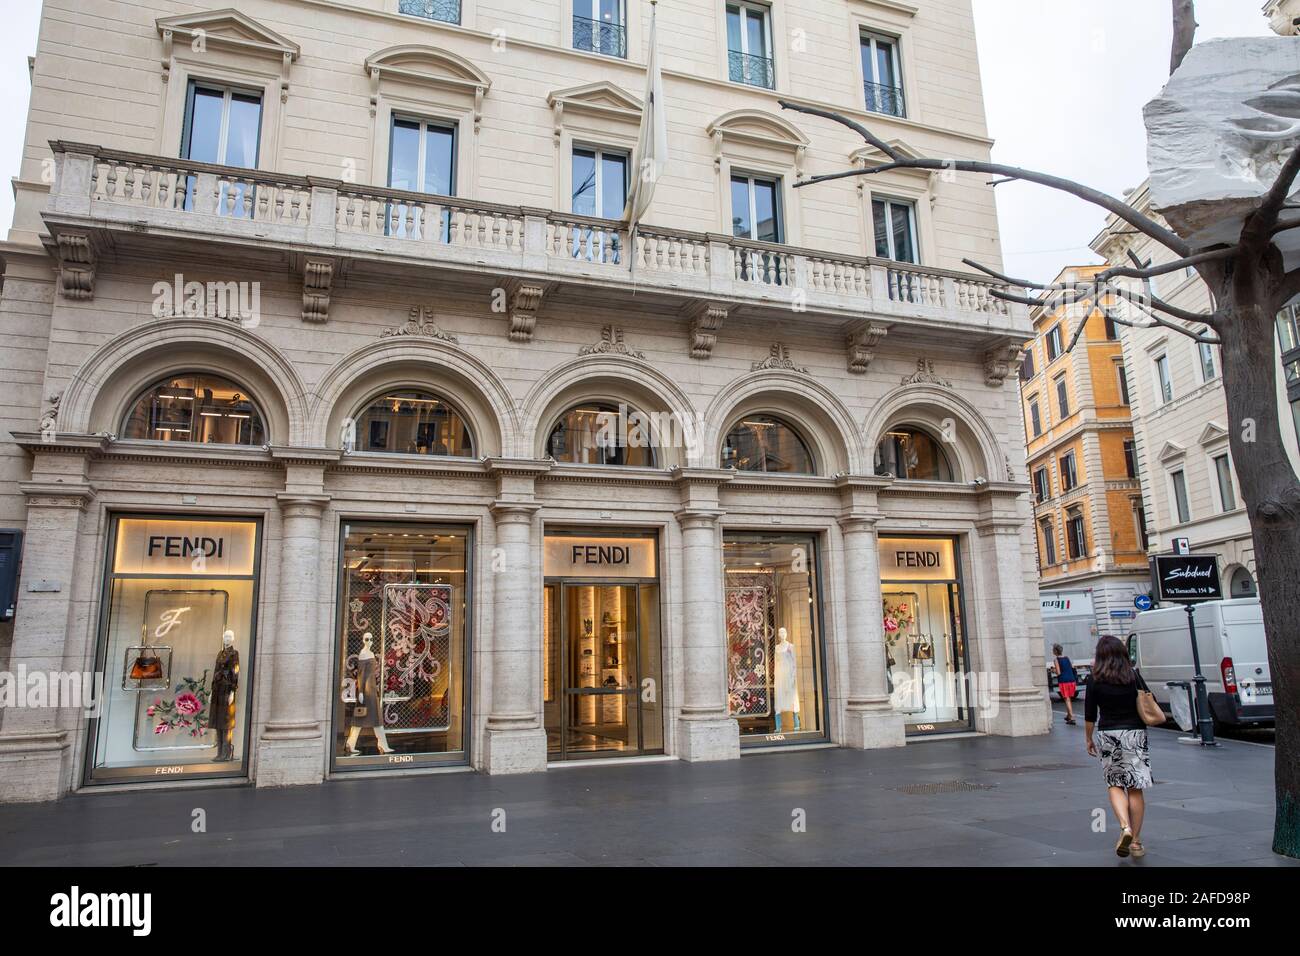 Italienische Mode Marke, Fendi, Store im Zentrum von Rom, Latium, Italien  Stockfotografie - Alamy